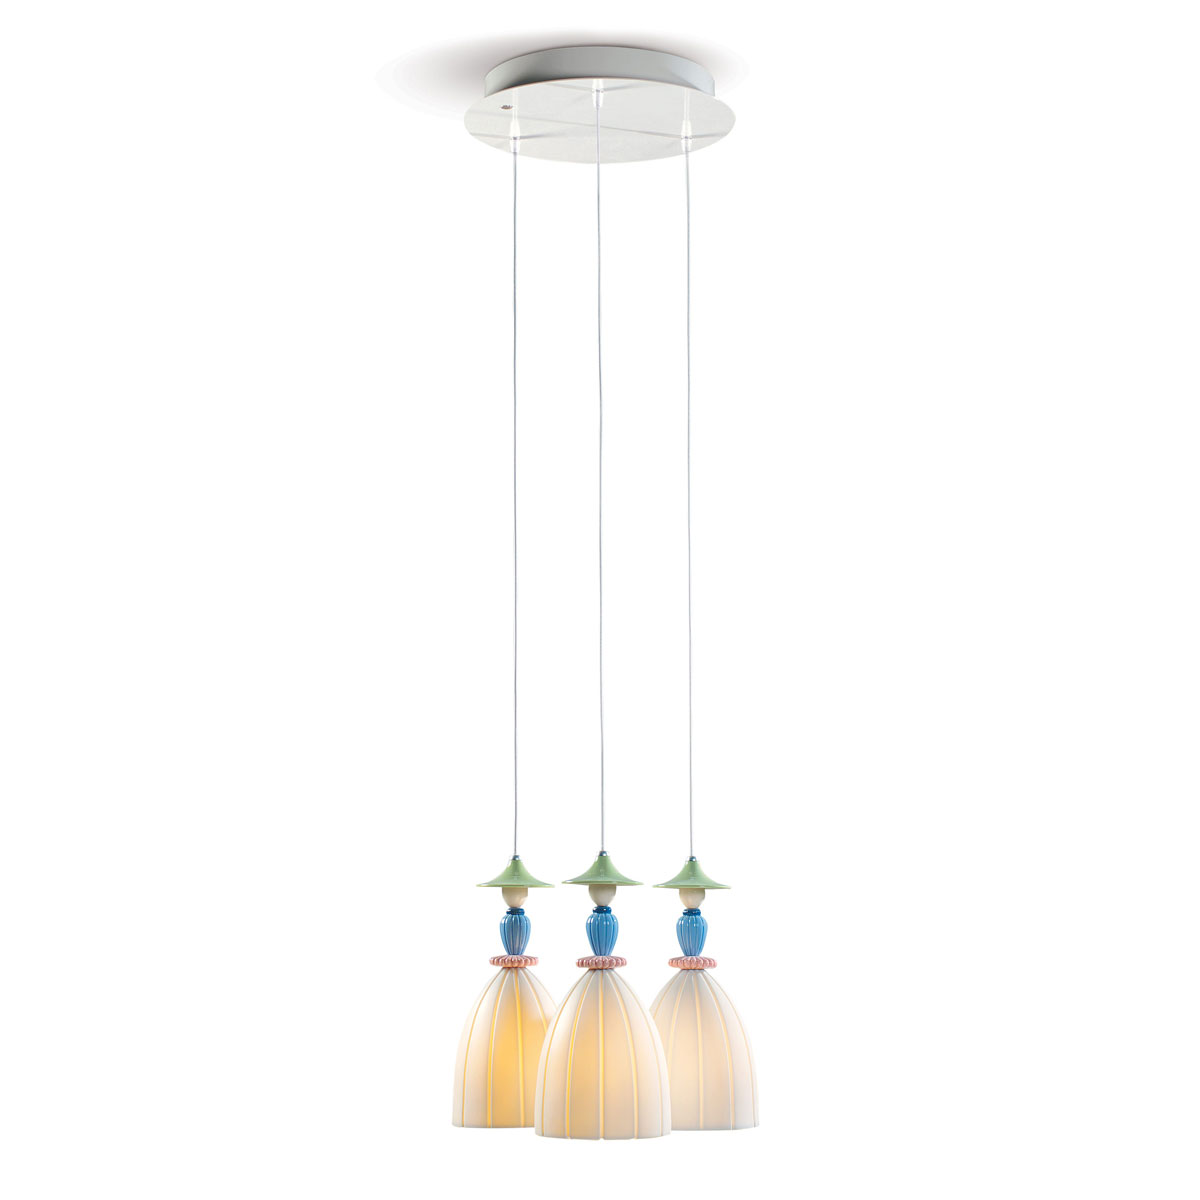 Lladro Classic Lighting, Mademoiselle Round Canopy 3 Lights Sharing Secrets Ceiling Lamp